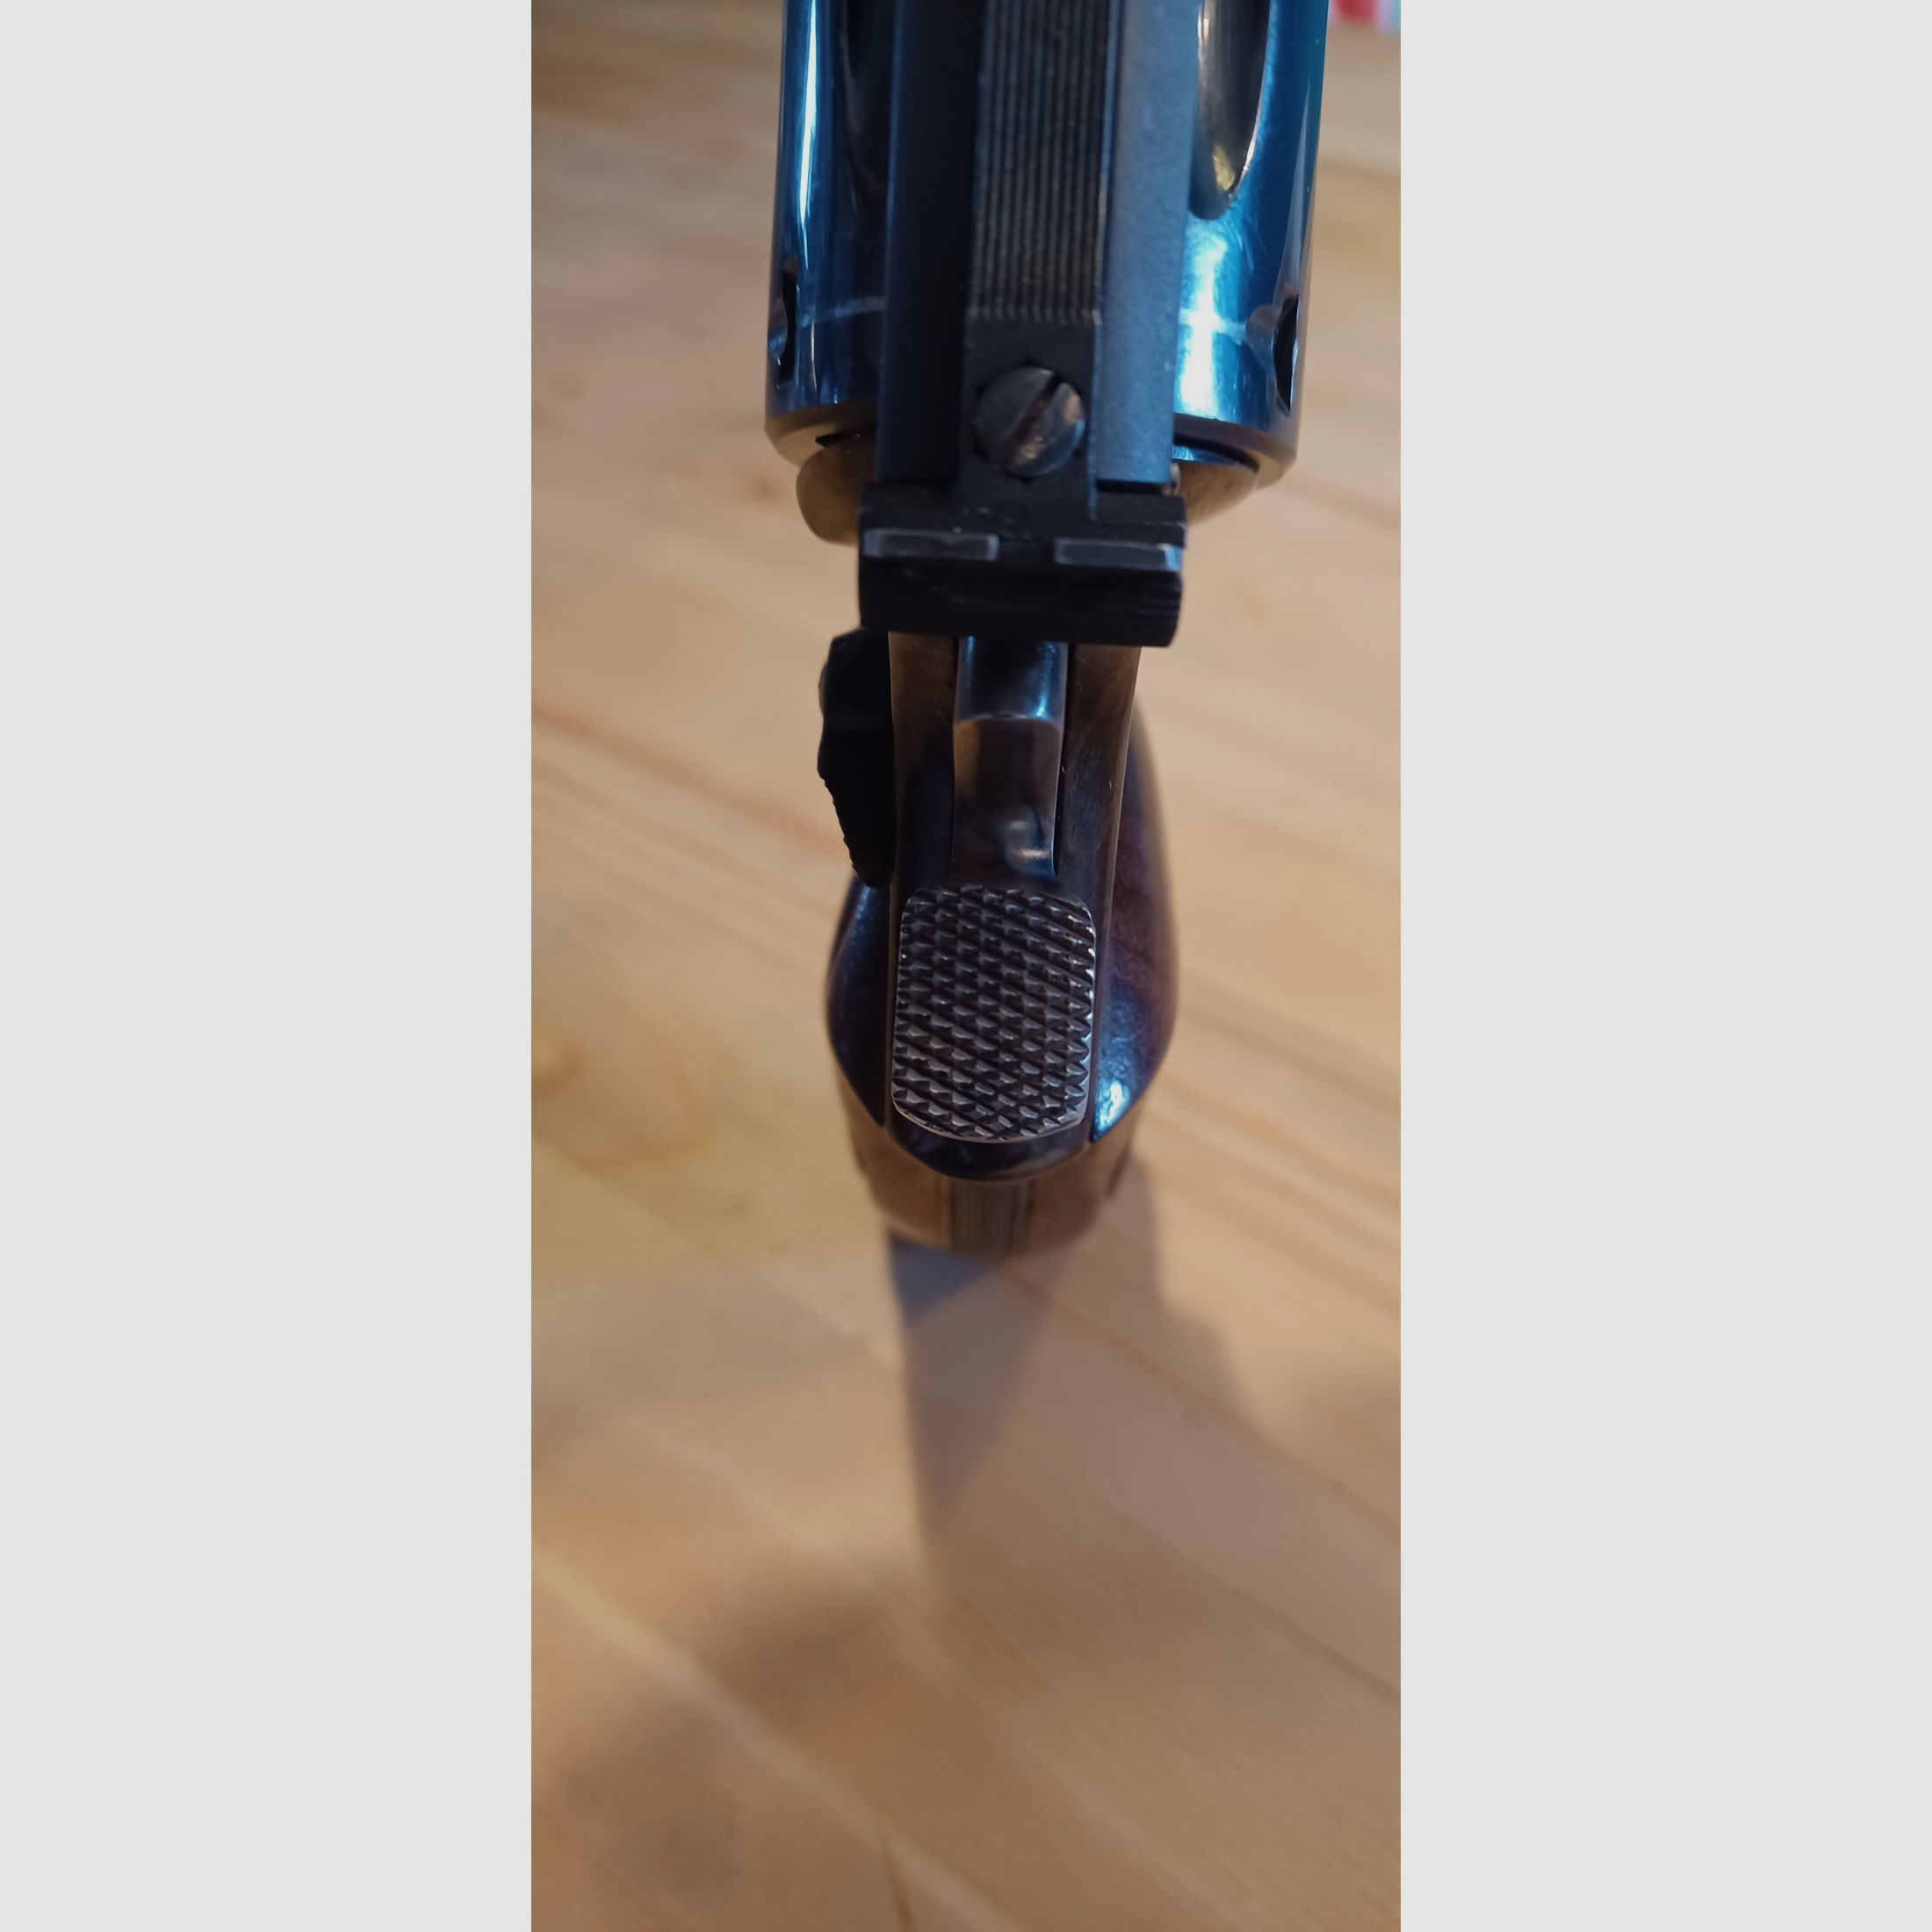 Smith & Wesson Mod. 17-3 K-22 Masterpiece 6" blue finish KK Match Revolver